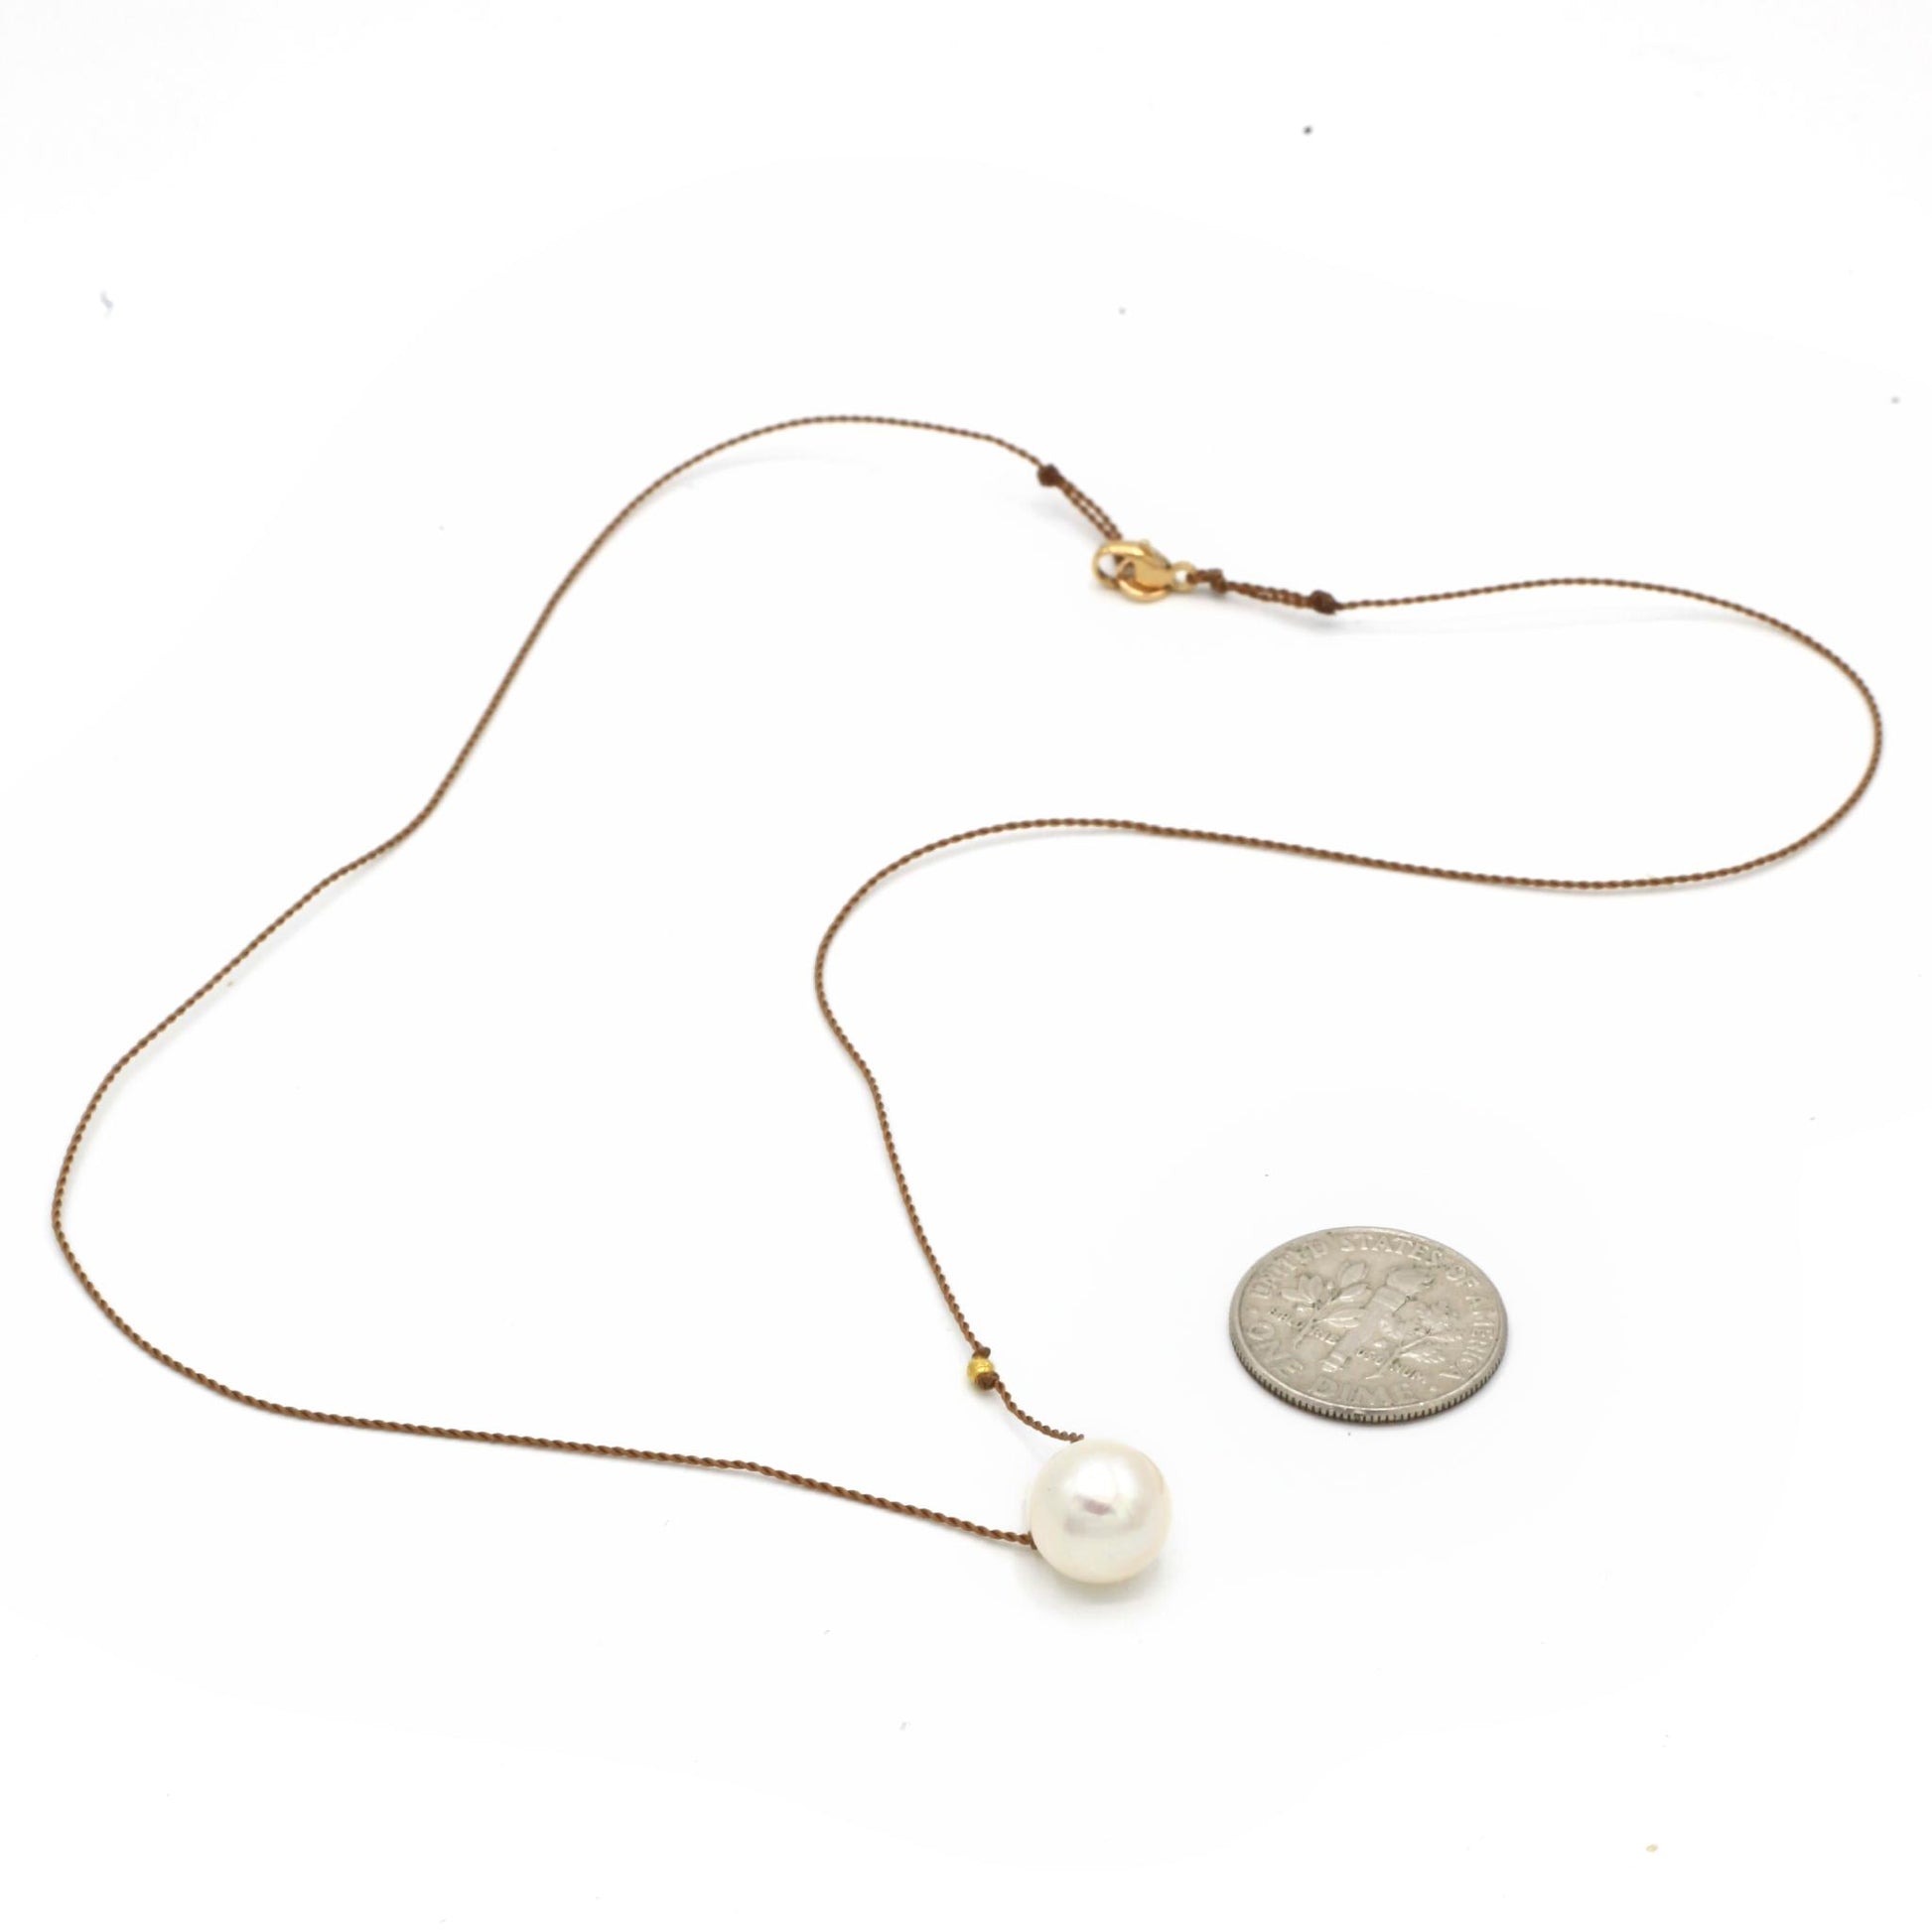 Margaret Solow Jewelry | Freshwater Baroque Pearl + 18k Gold Bead Drop Necklace | Firecracker